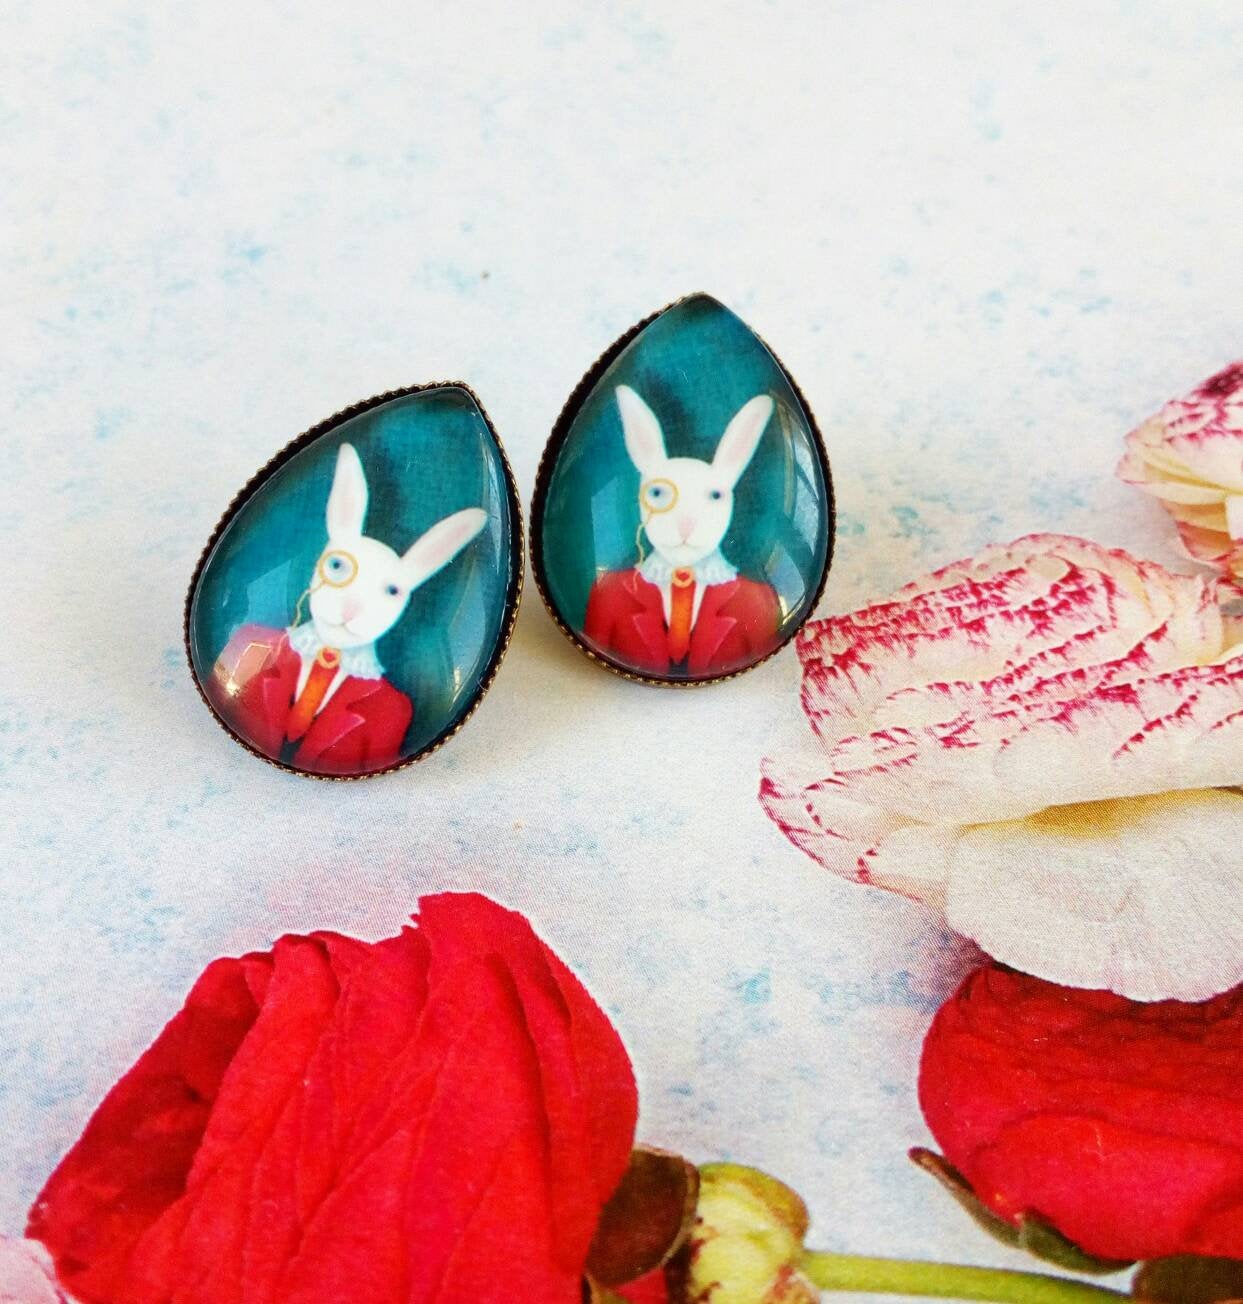 Bunny Earrings, Anthropomorphic Art Jewelry, Rabbit With Monocle